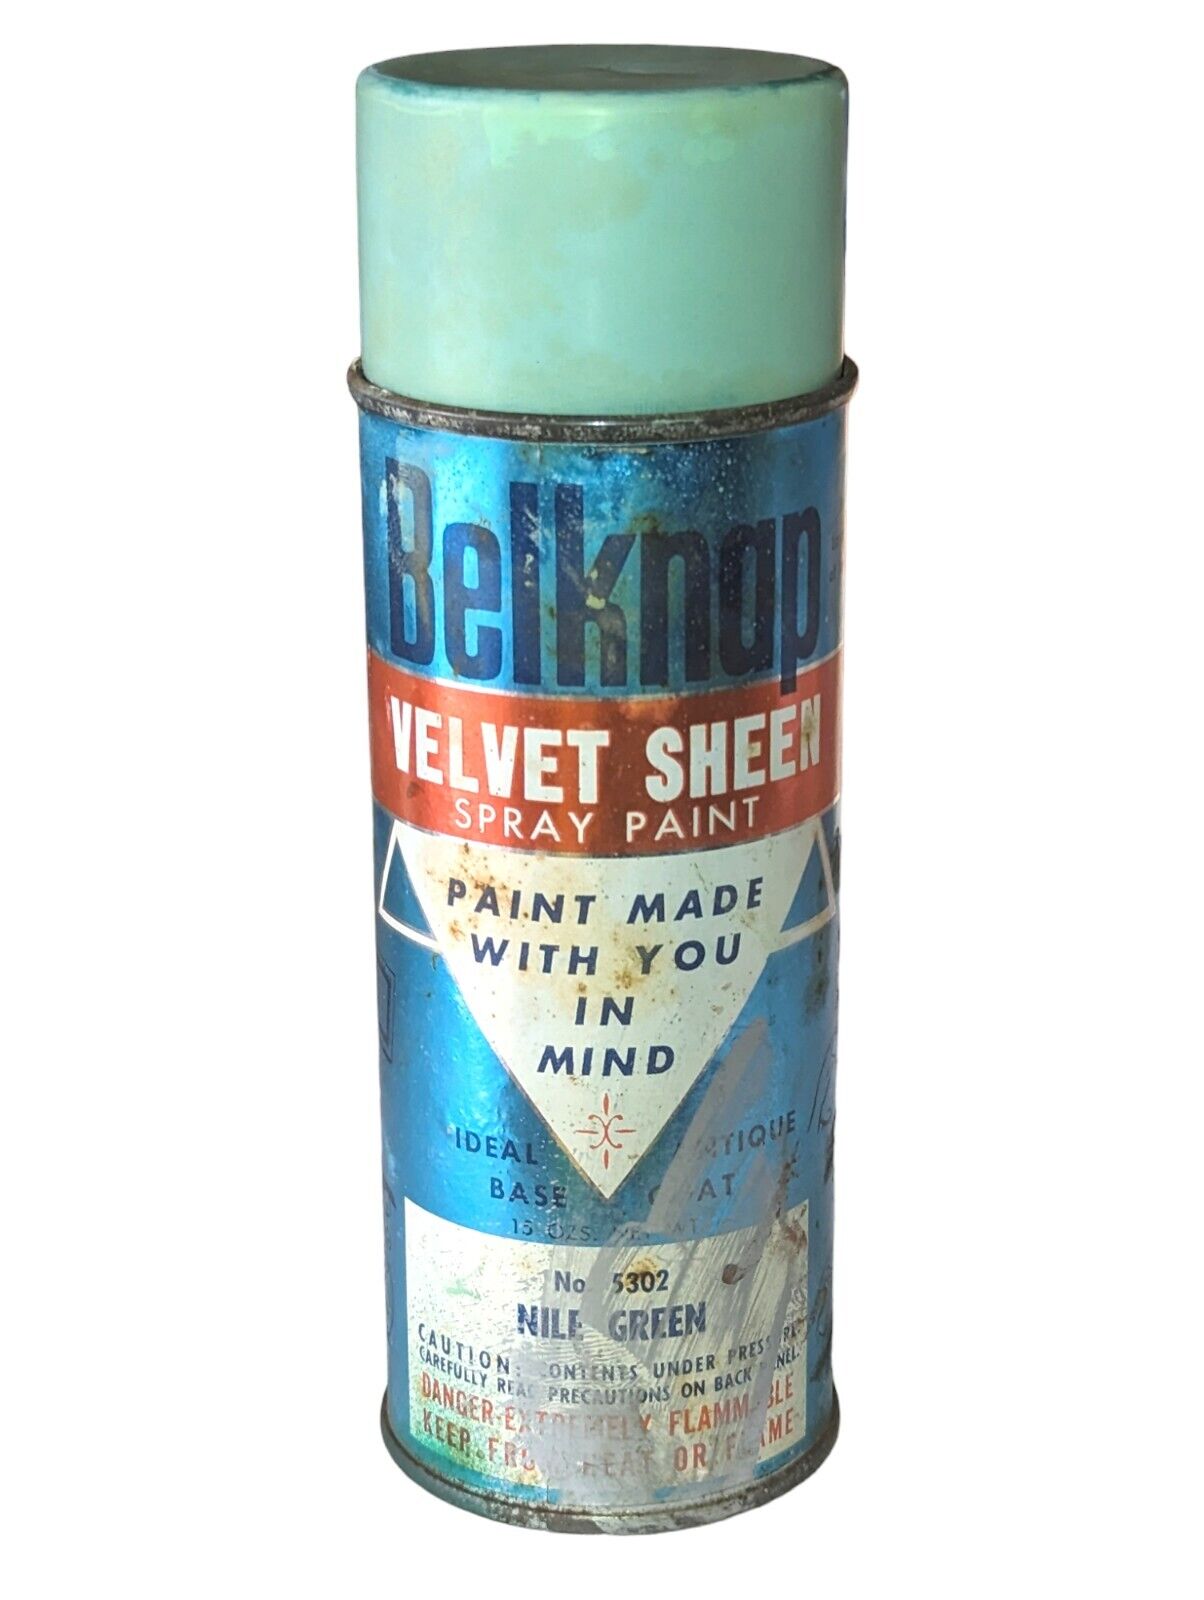 Rare (Nile Green) Belknap Velvet Sheen Spray Paint Collectable Can.